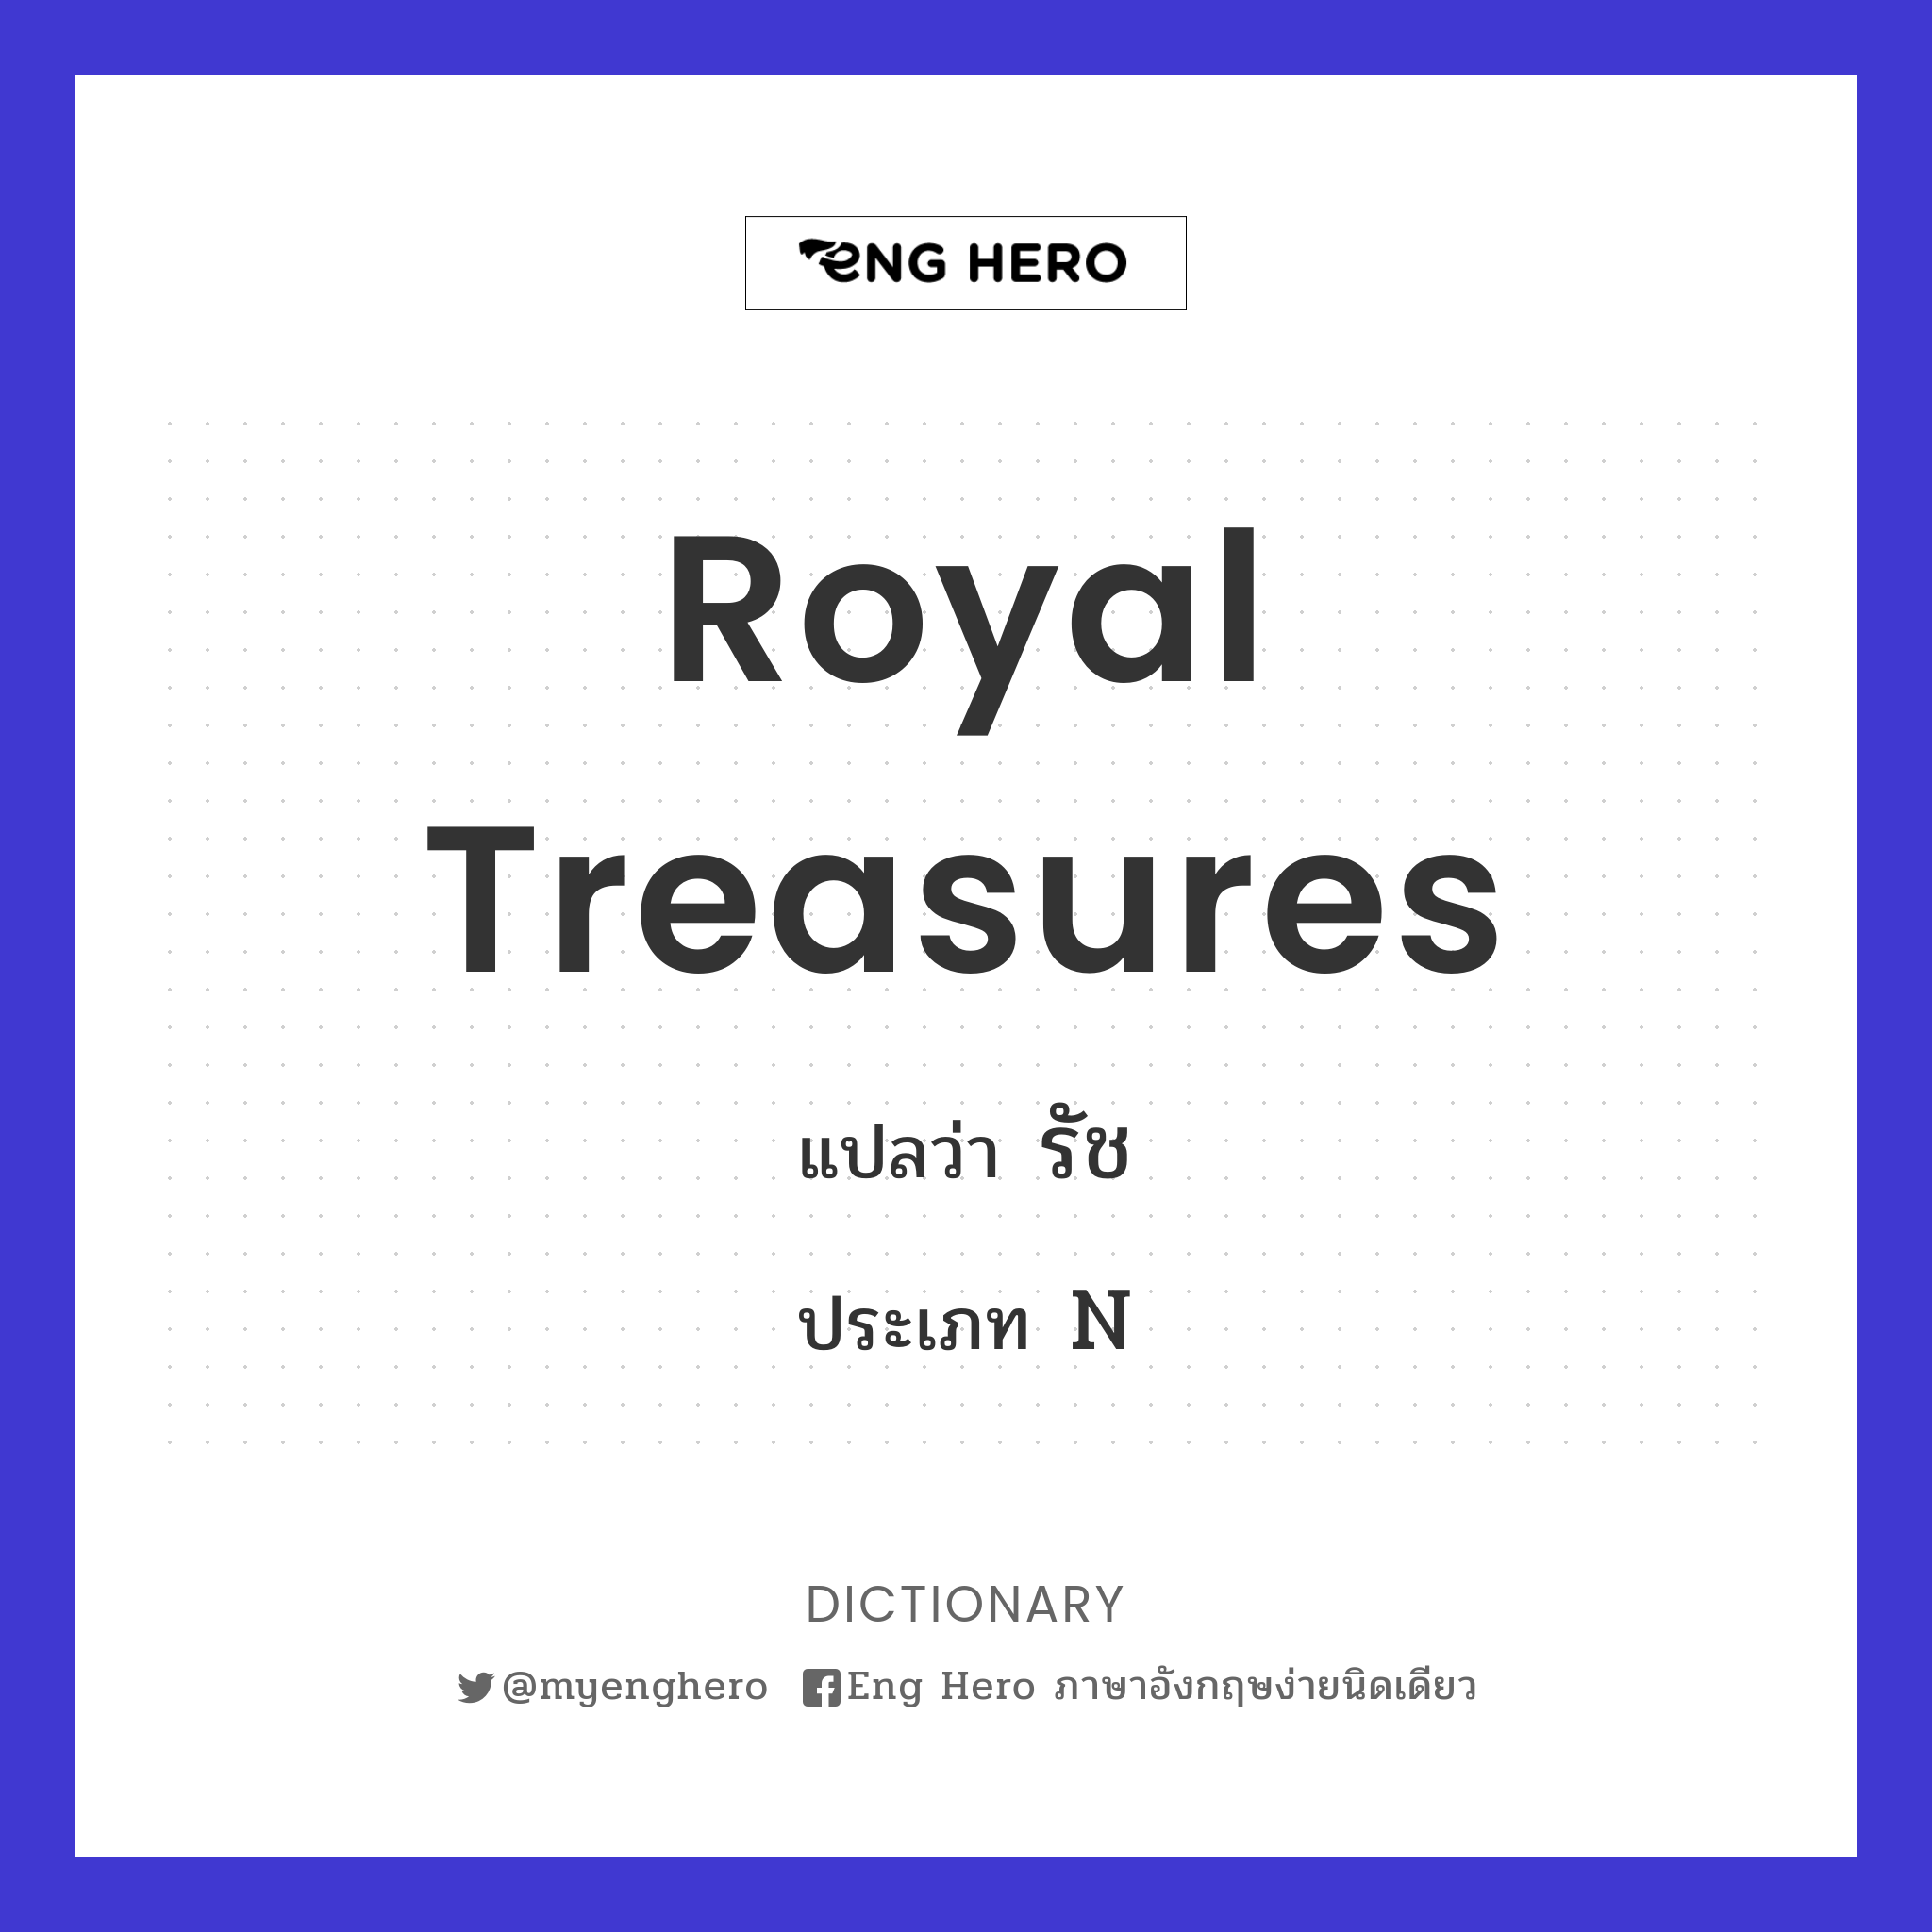 royal treasures